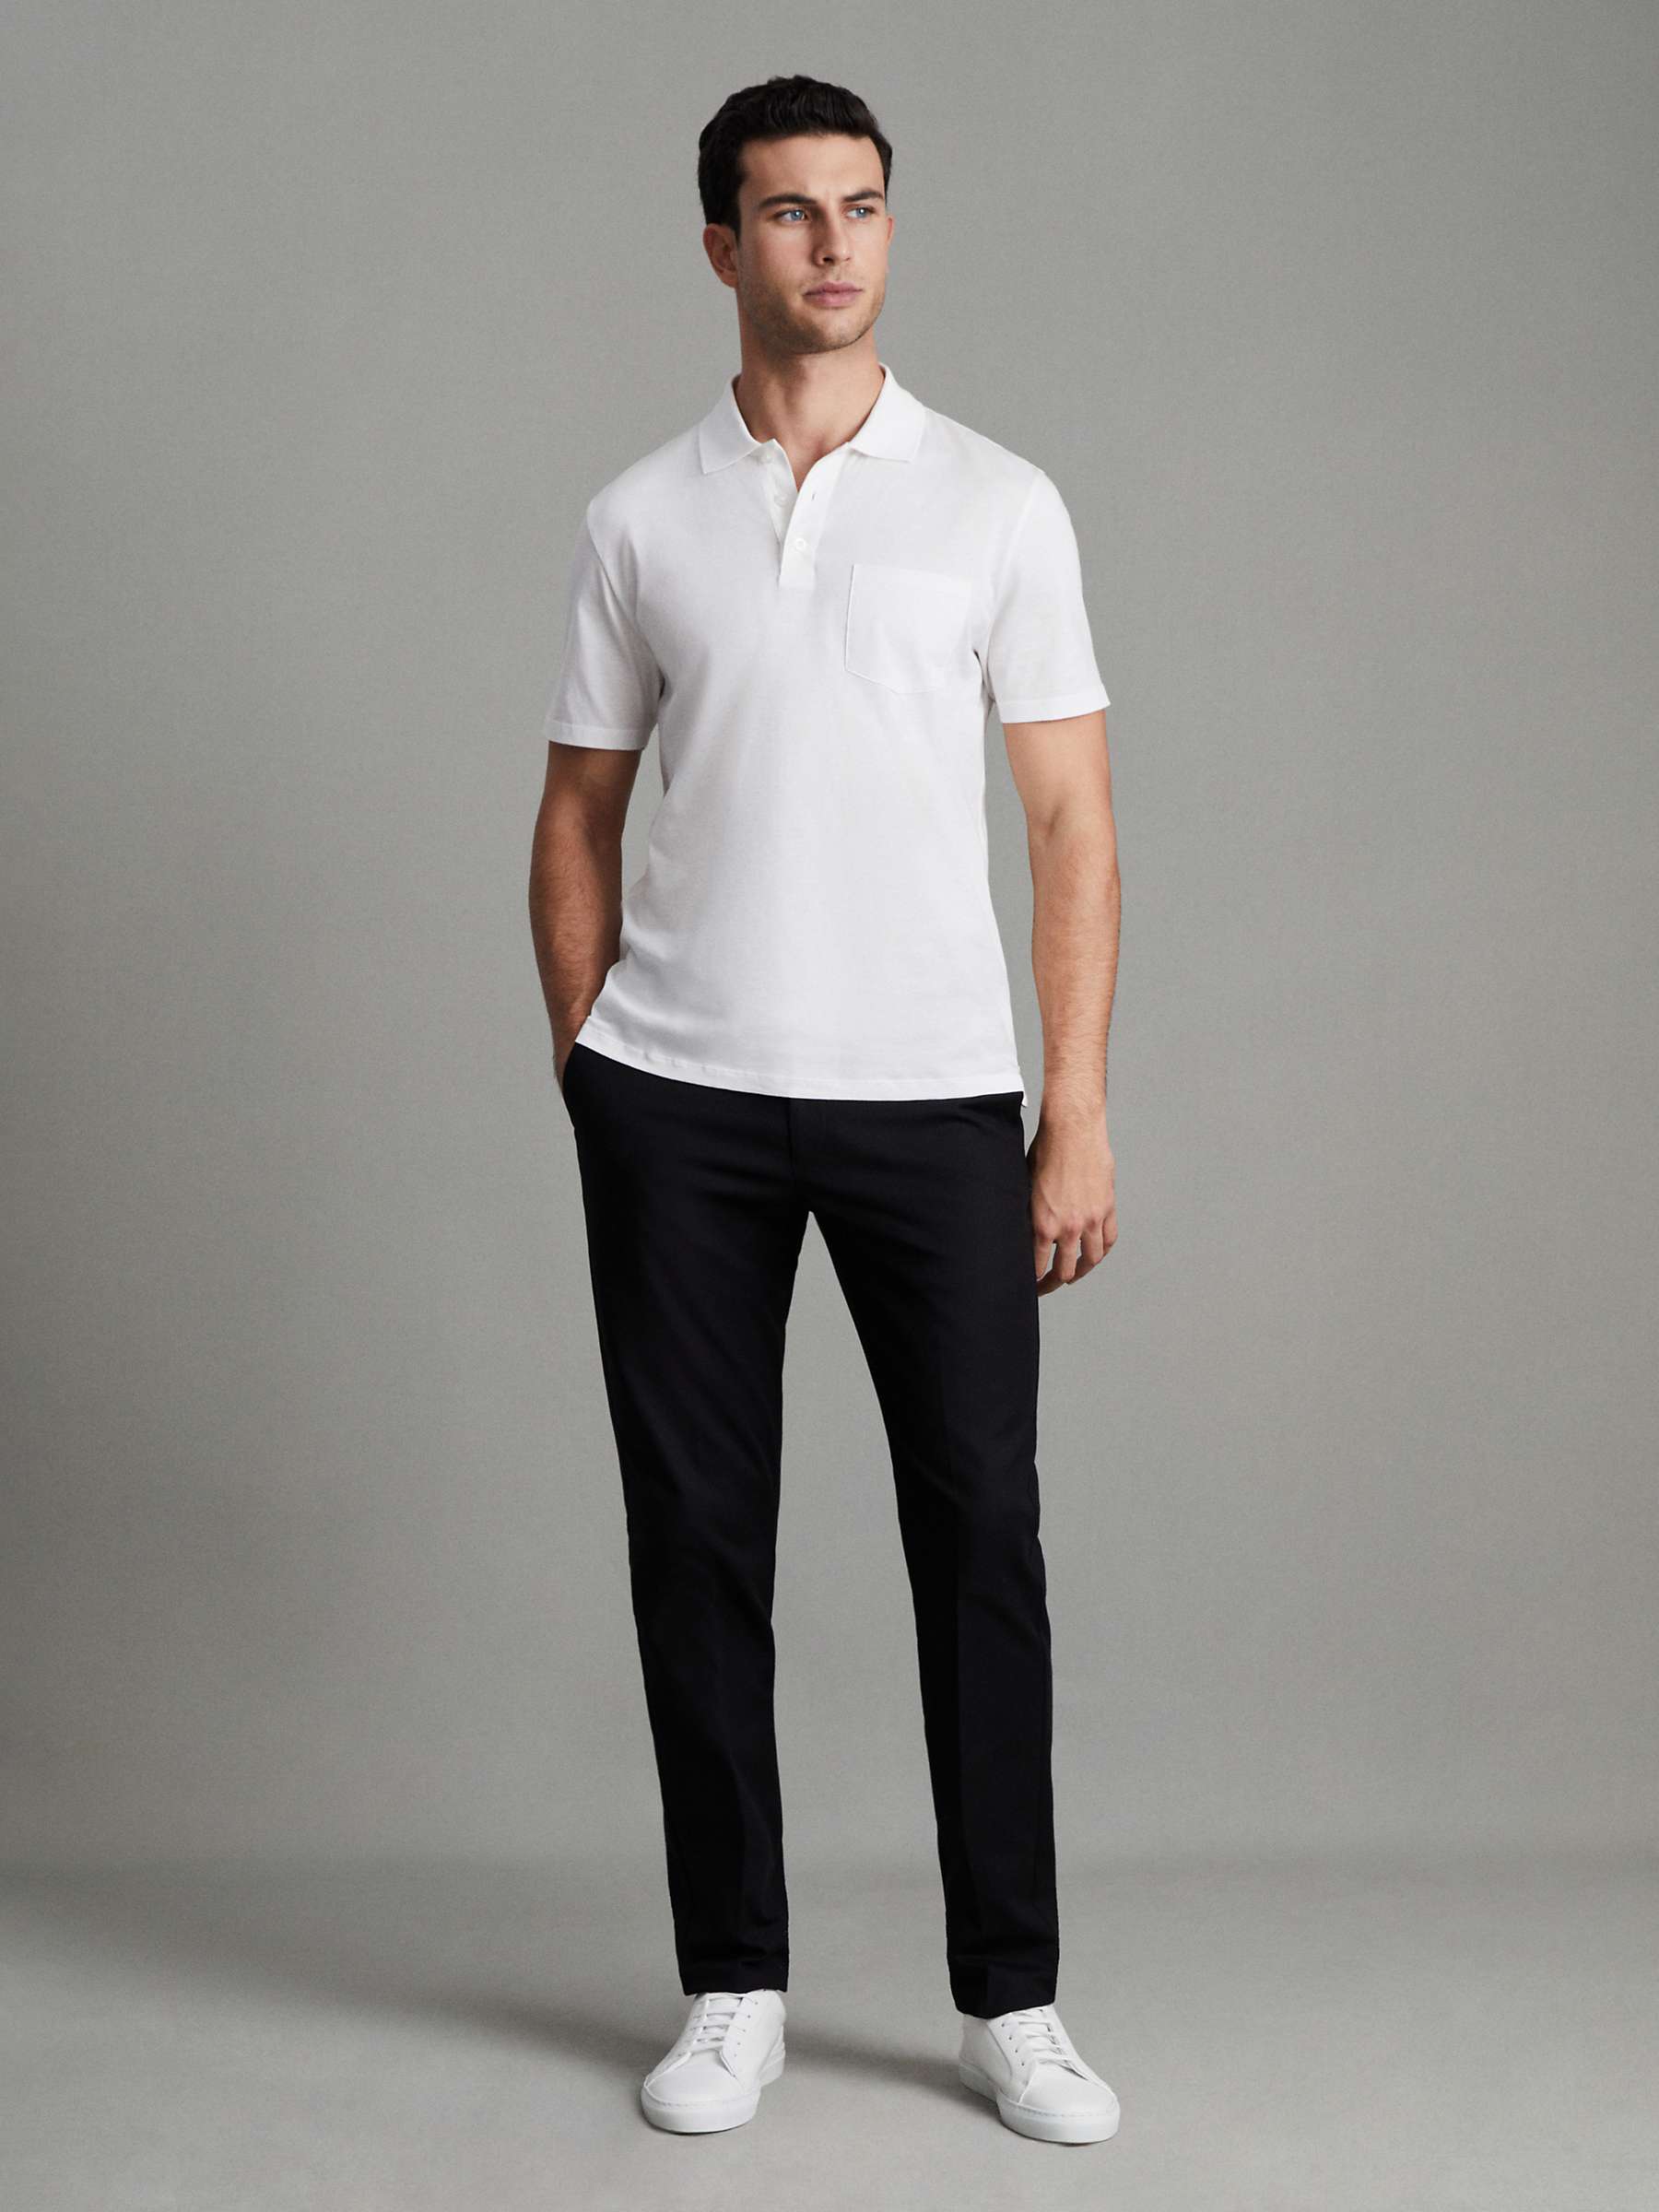 Buy Reiss Austin Short Sleeve Cotton Polo Shirt Online at johnlewis.com